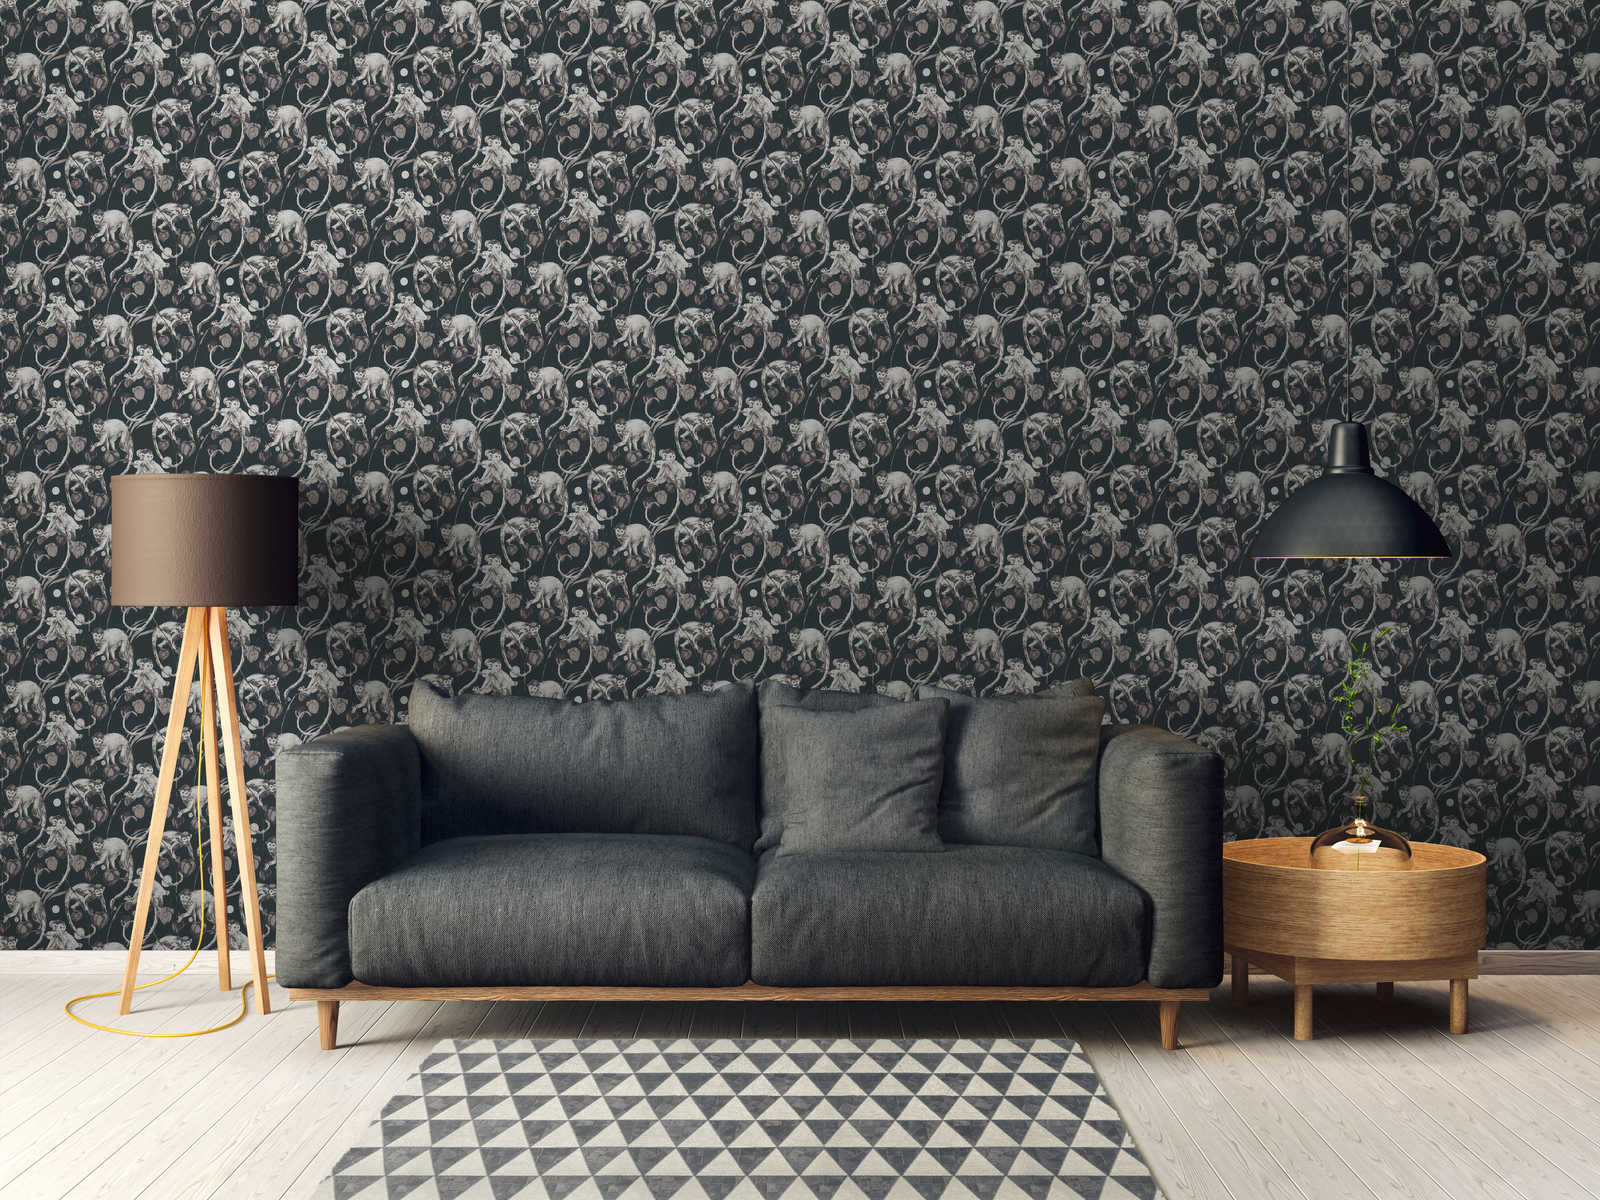             Dark non-woven wallpaper monkeys & leaves design by MICHALSKY
        